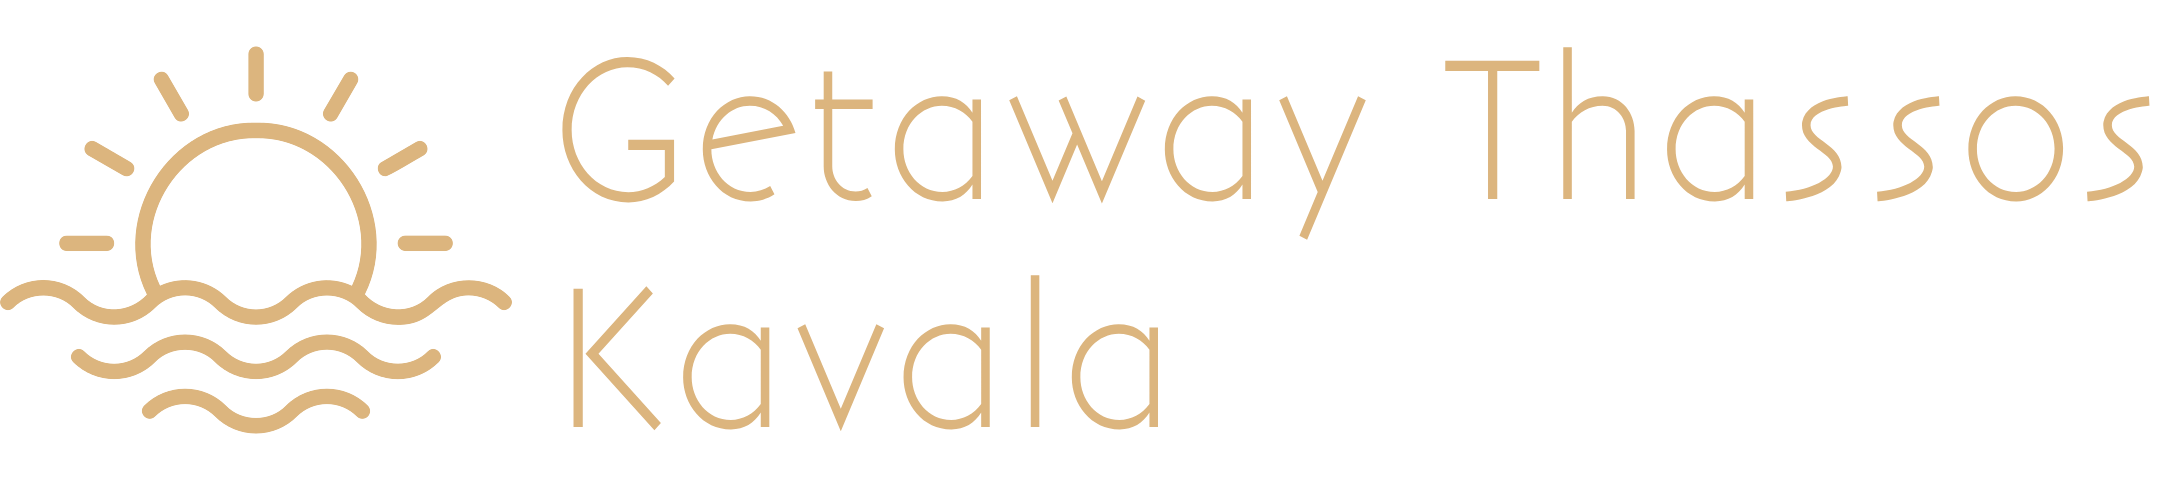 Getaway Thassos Kavala | Test Location - Getaway Thassos Kavala